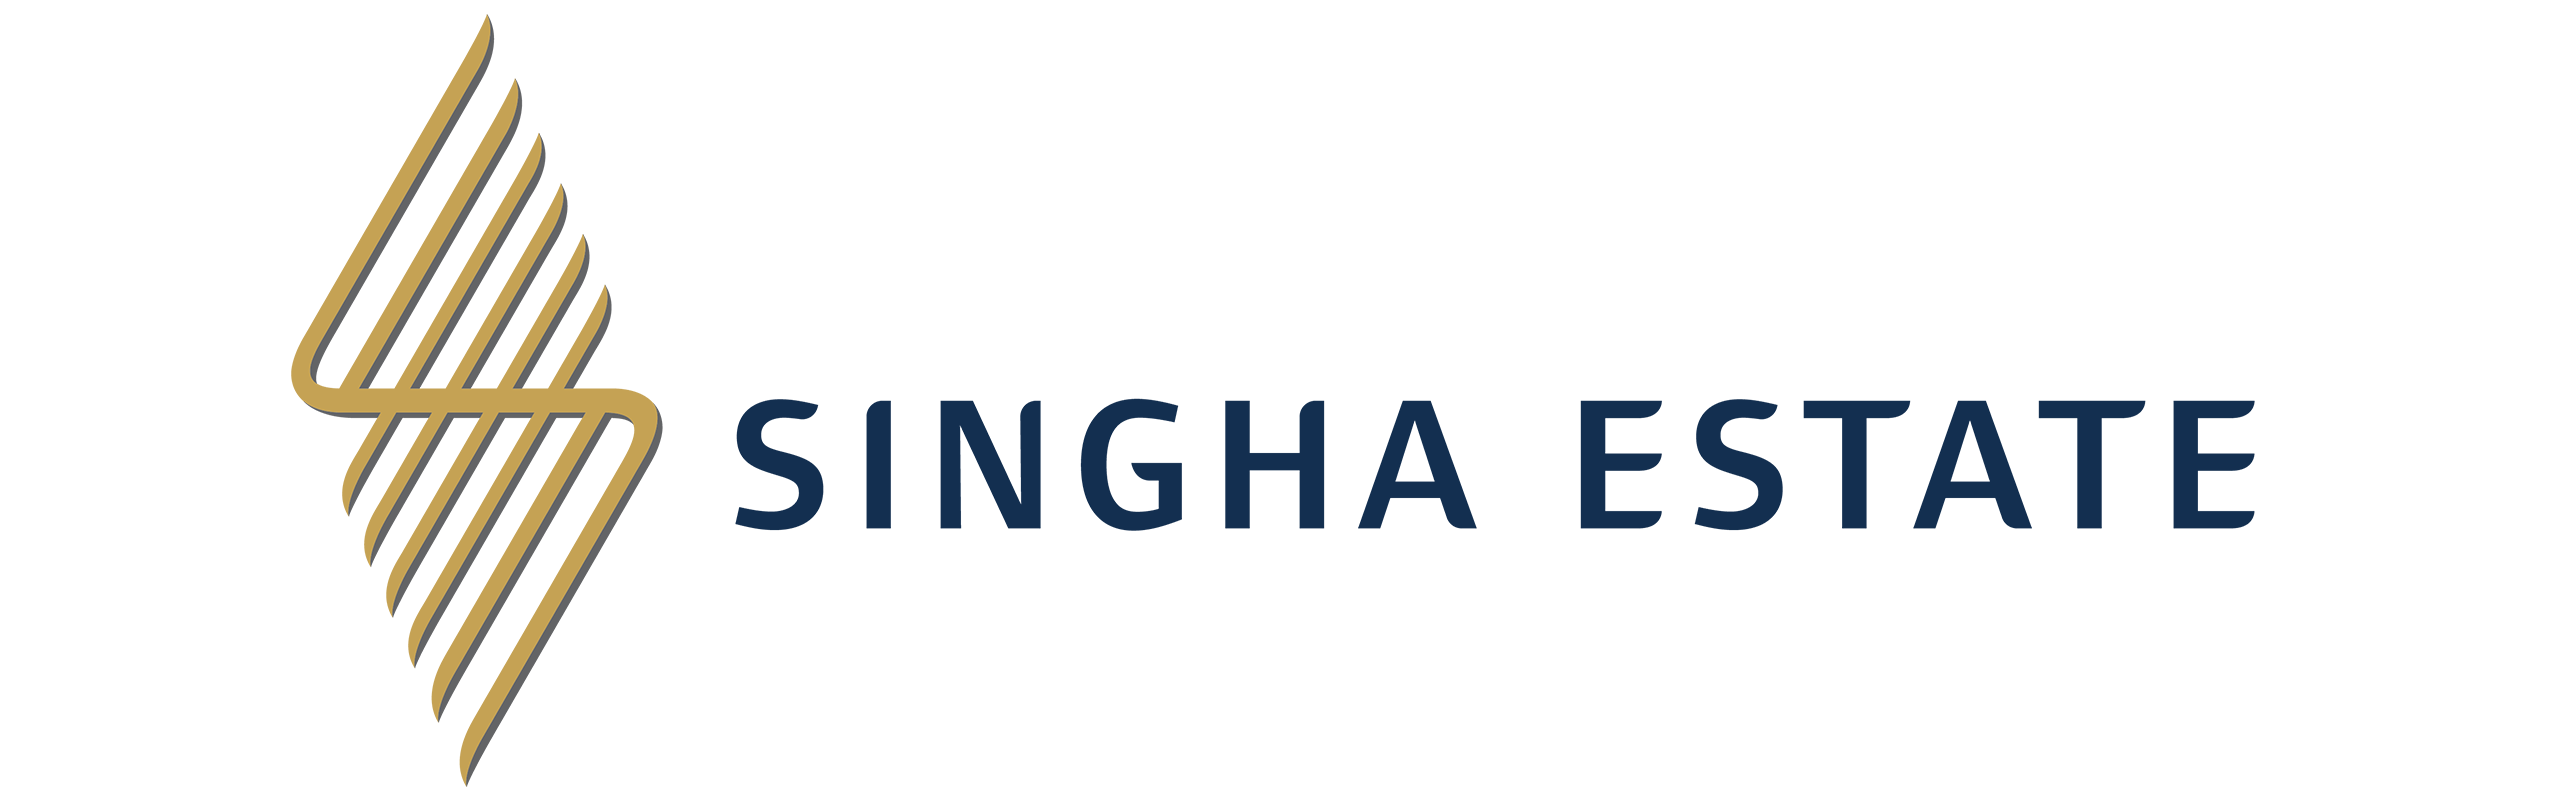 singha-estate_colored